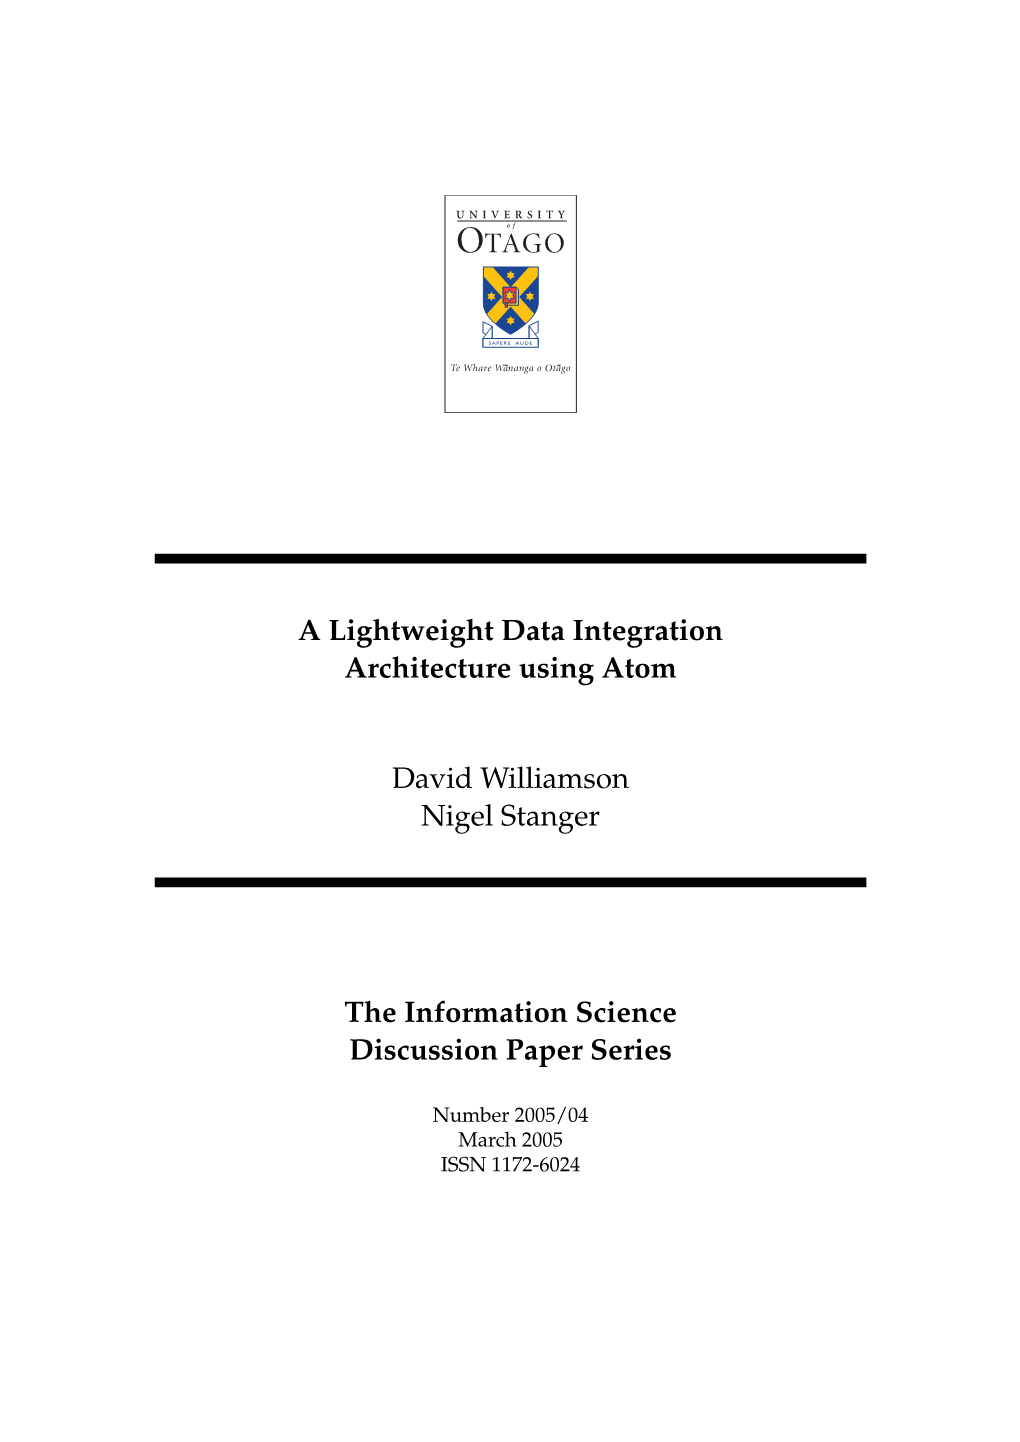 A Lightweight Data Integration Architecture Using Atom David W